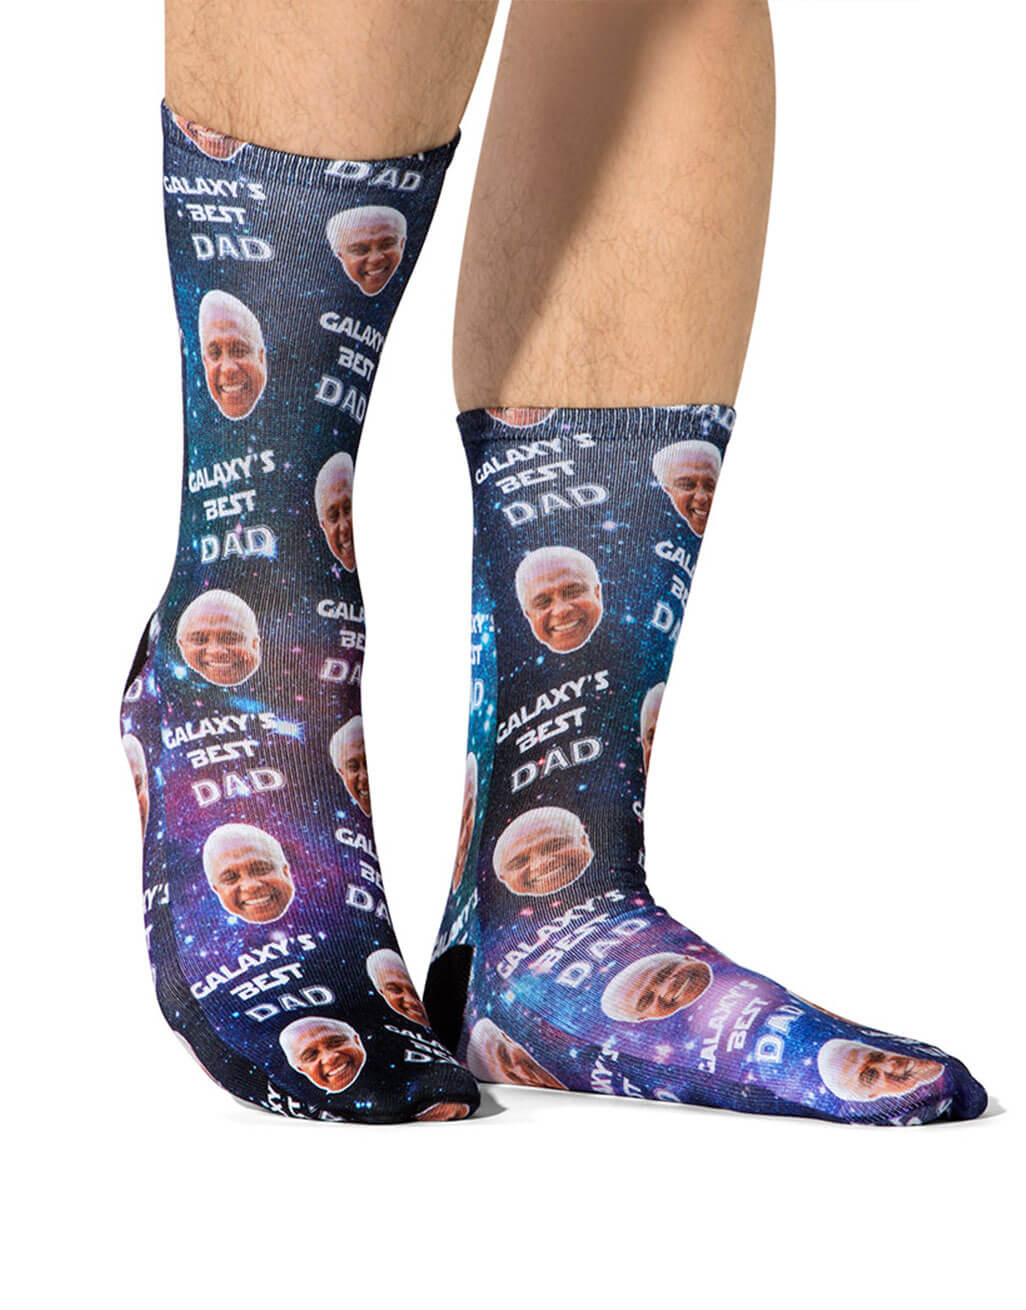 best dad socks